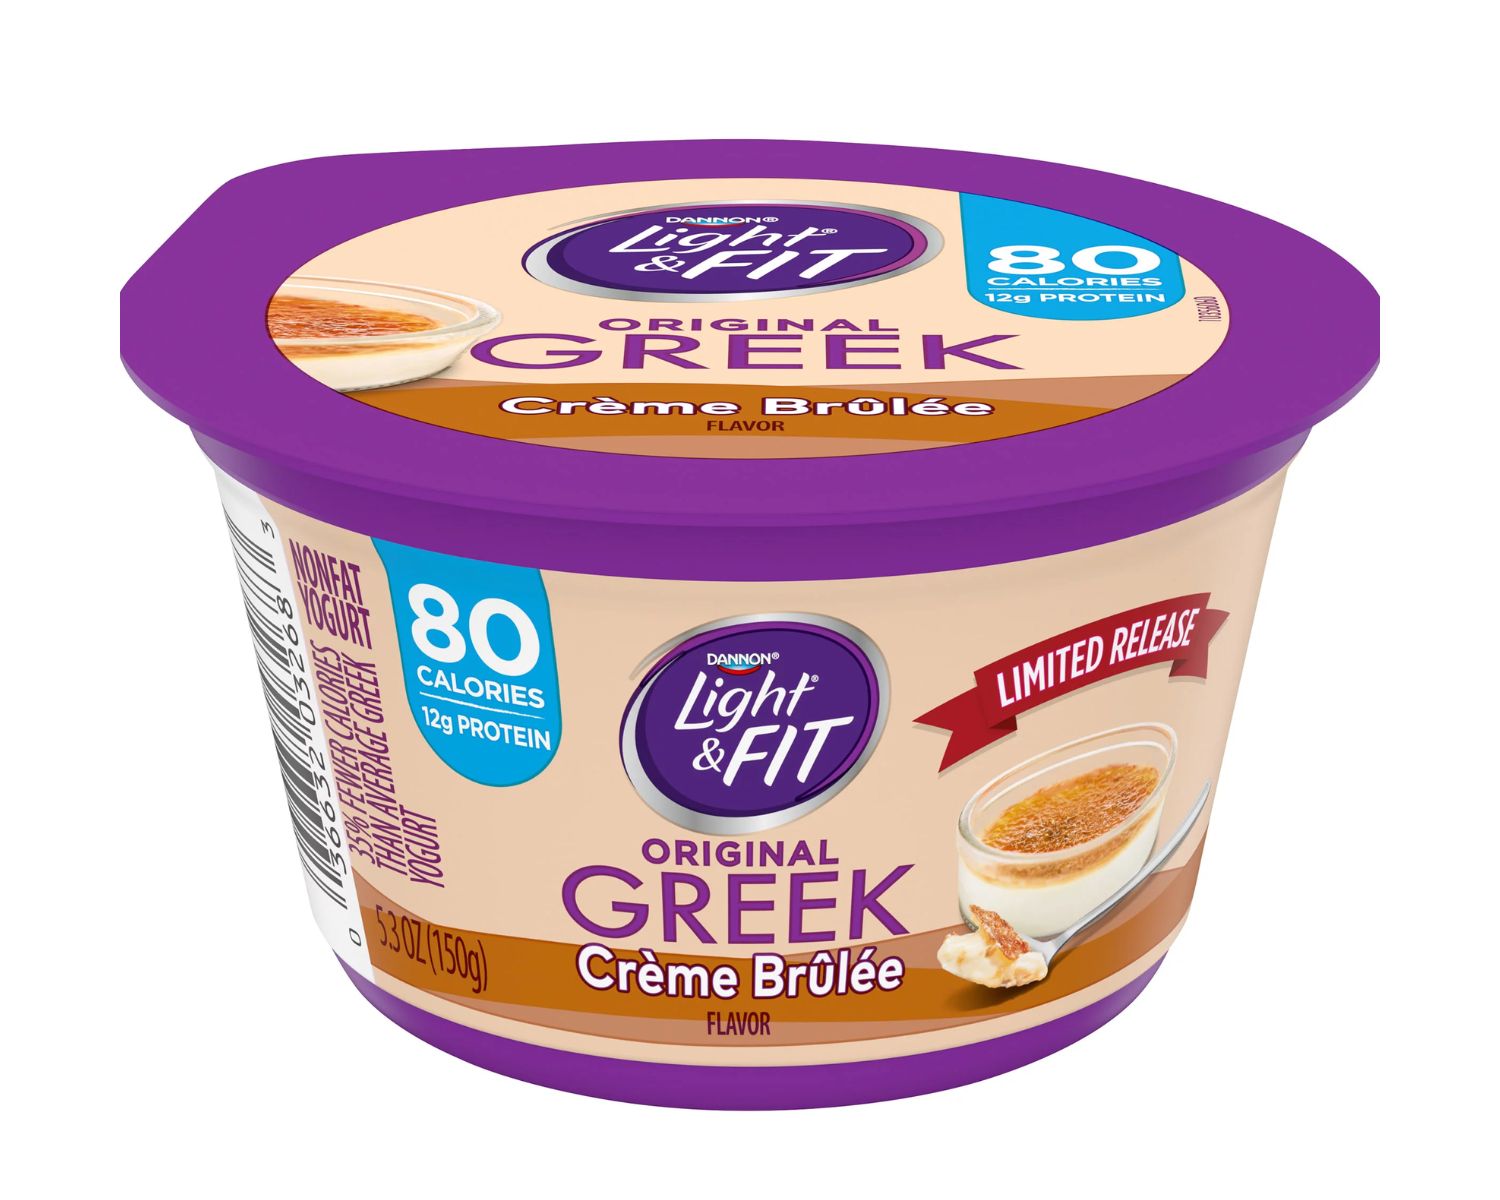 Fit Greek Yogurt Nutrition Facts